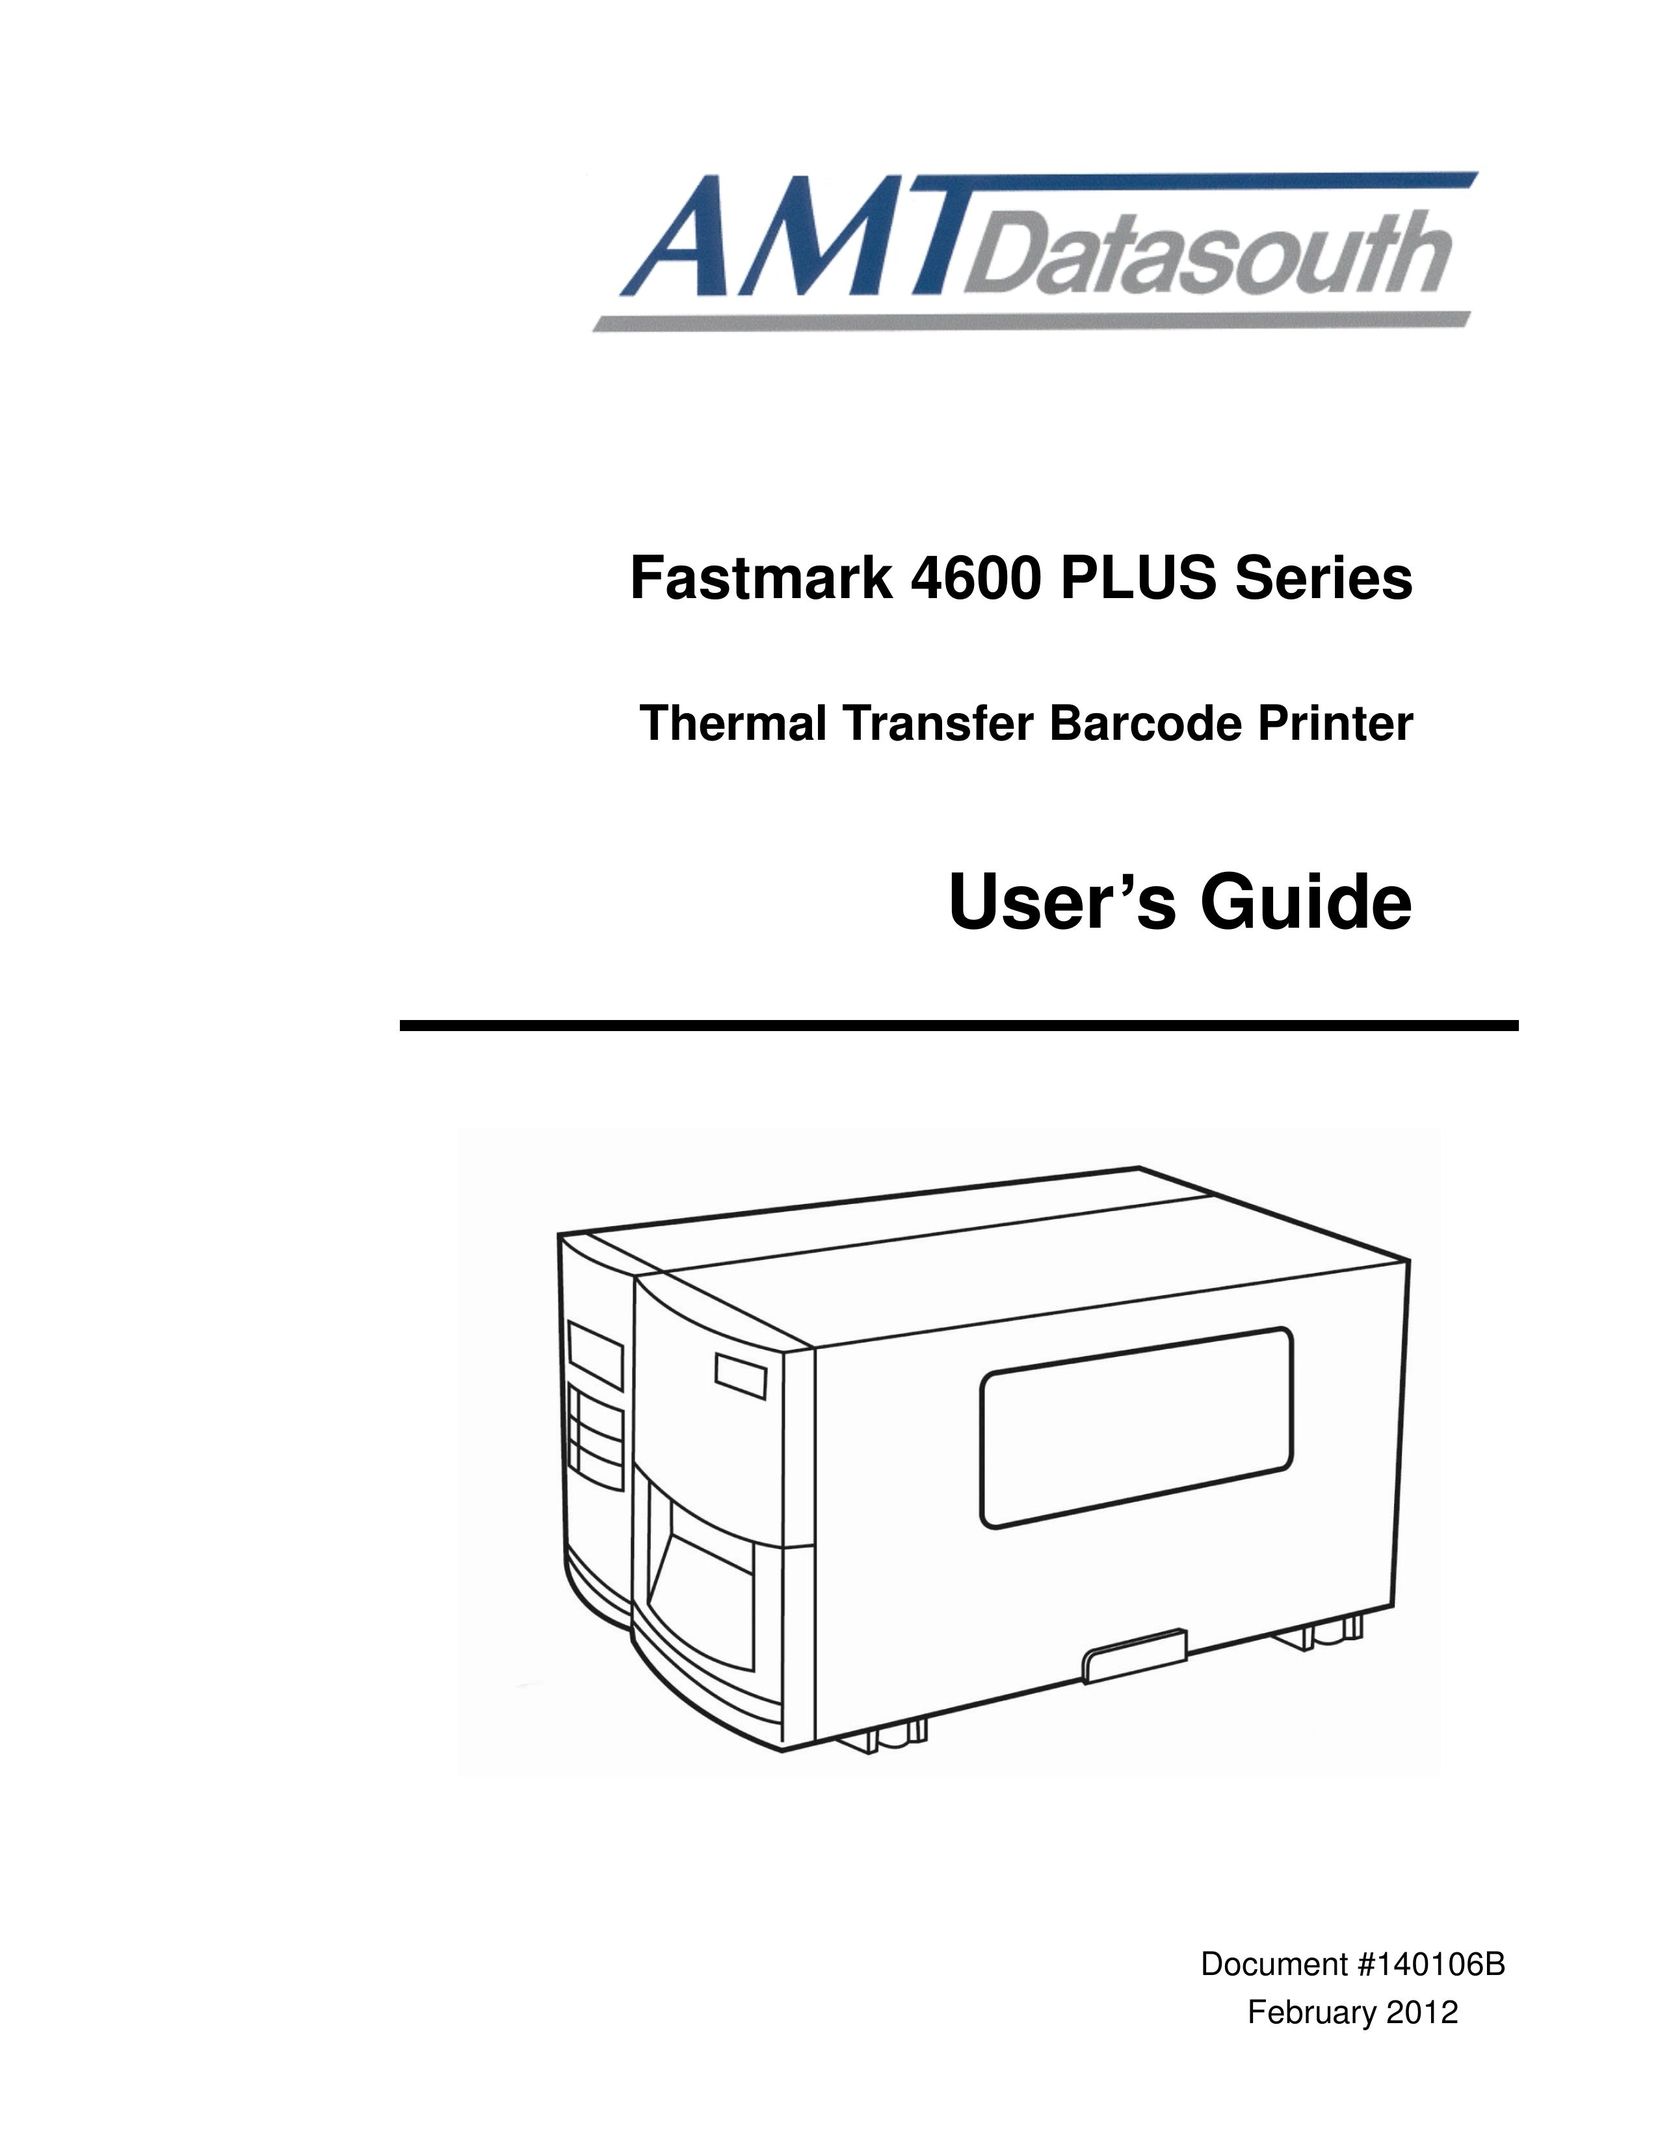 AMT Datasouth 4600 Printer User Manual